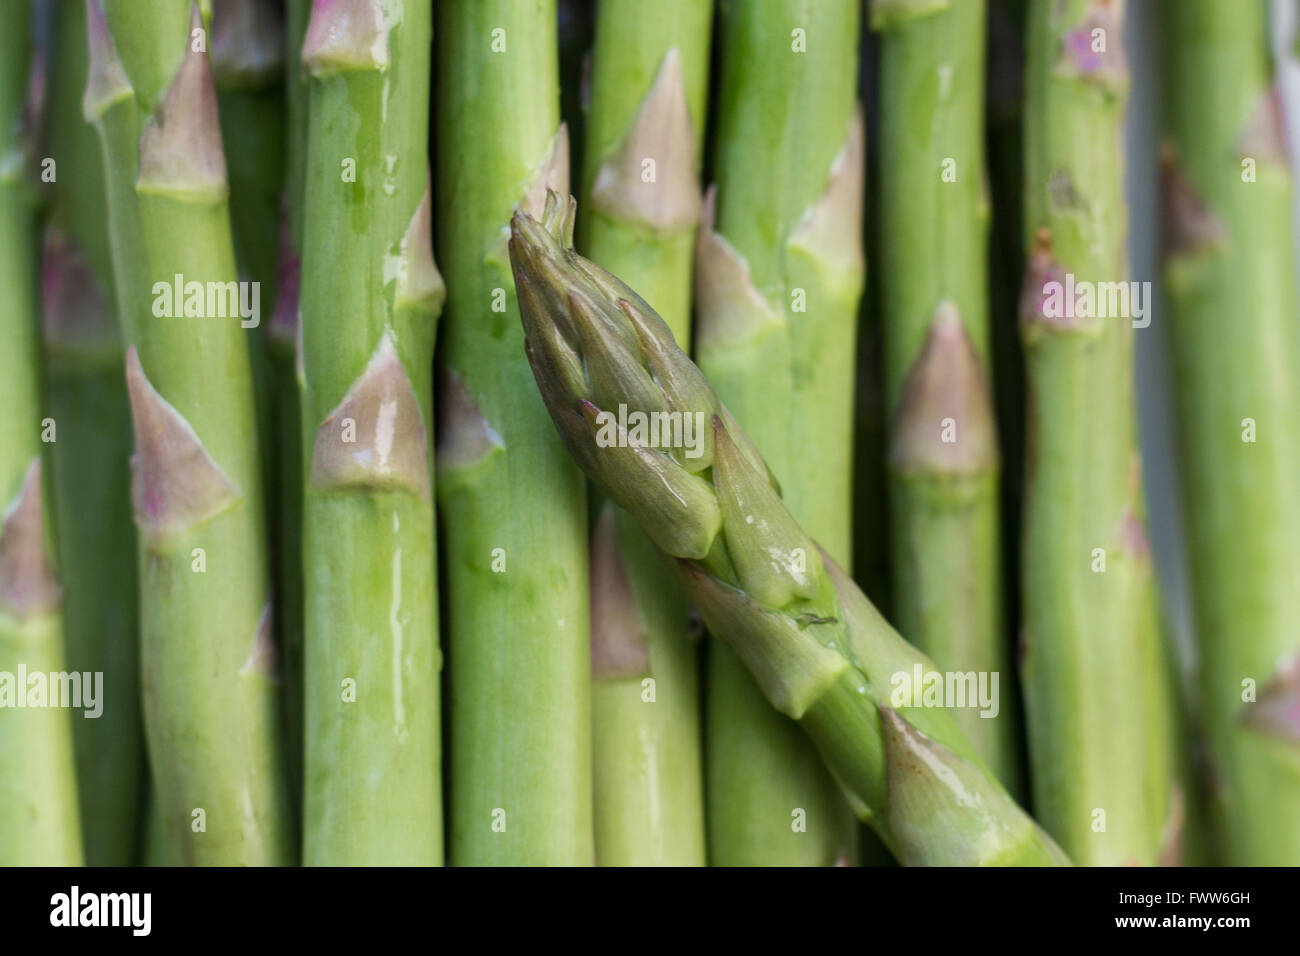 frischer grüner Spargel Makro raw - Food closeup Stockfoto